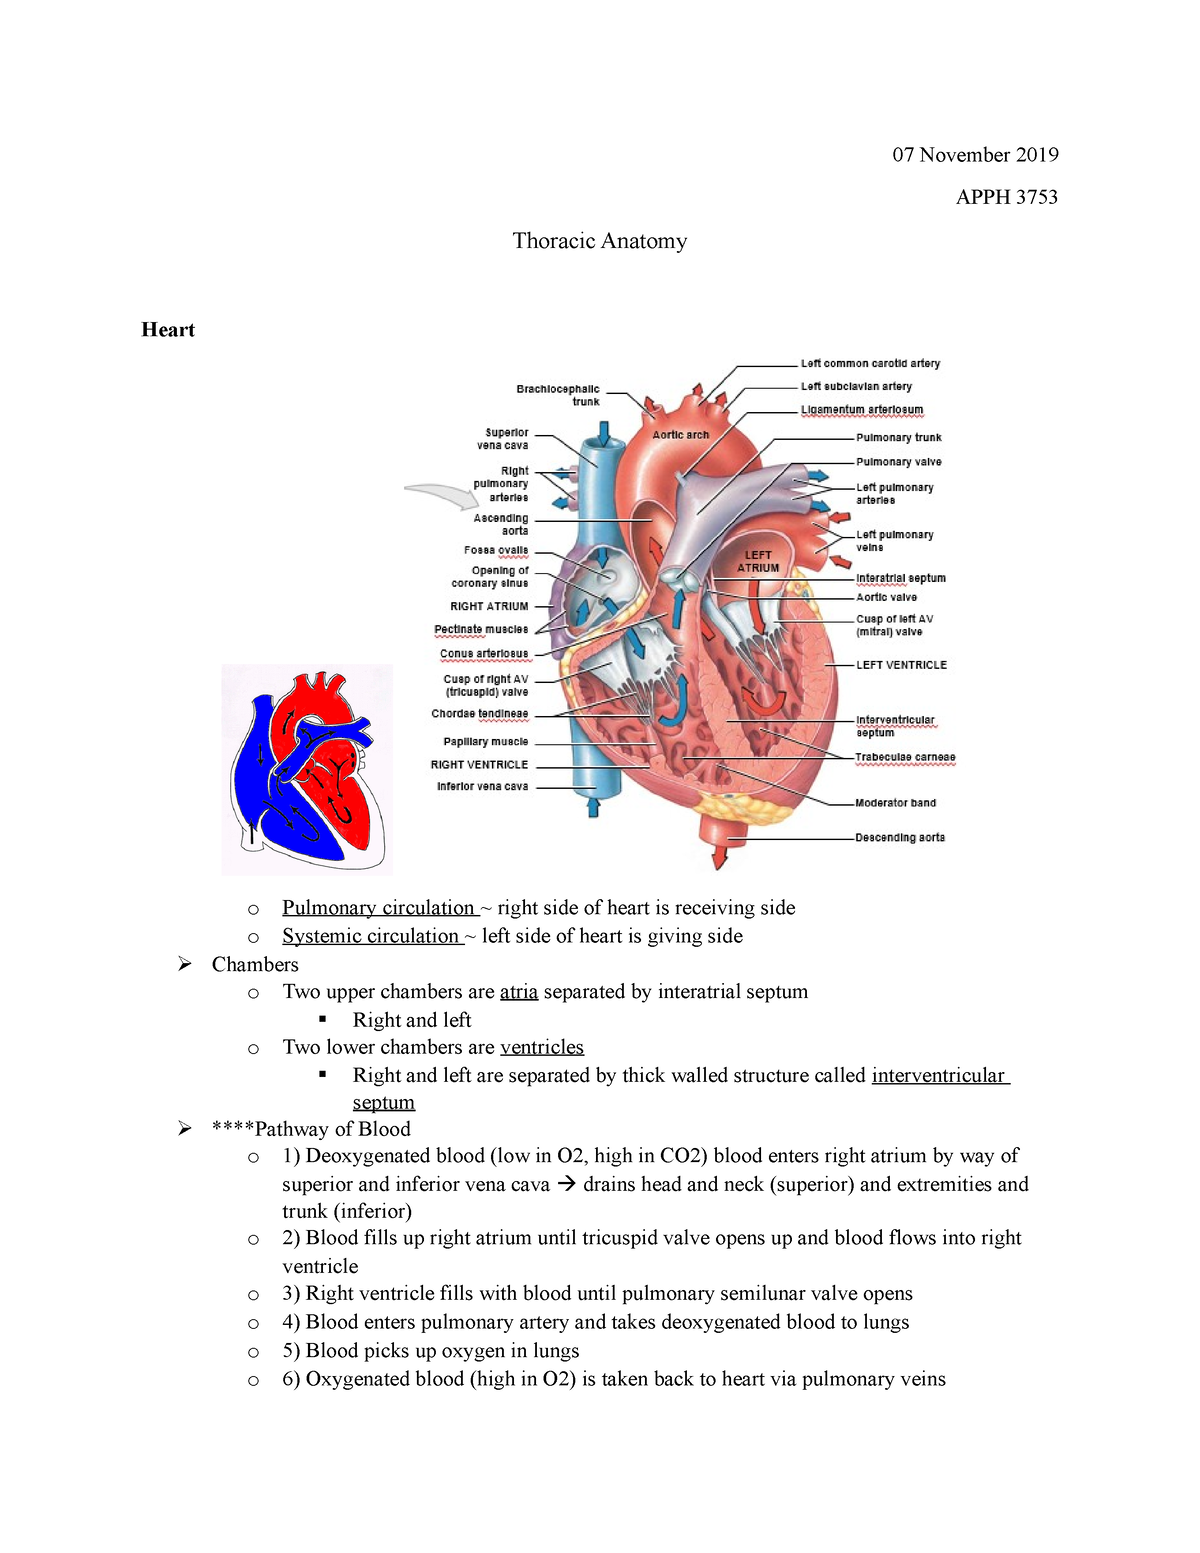 05 November - Thoracic Anatomy - 05 November 2019 APPH 3753 Thoracic Anatomy  o Transthoracic plane – - Studocu